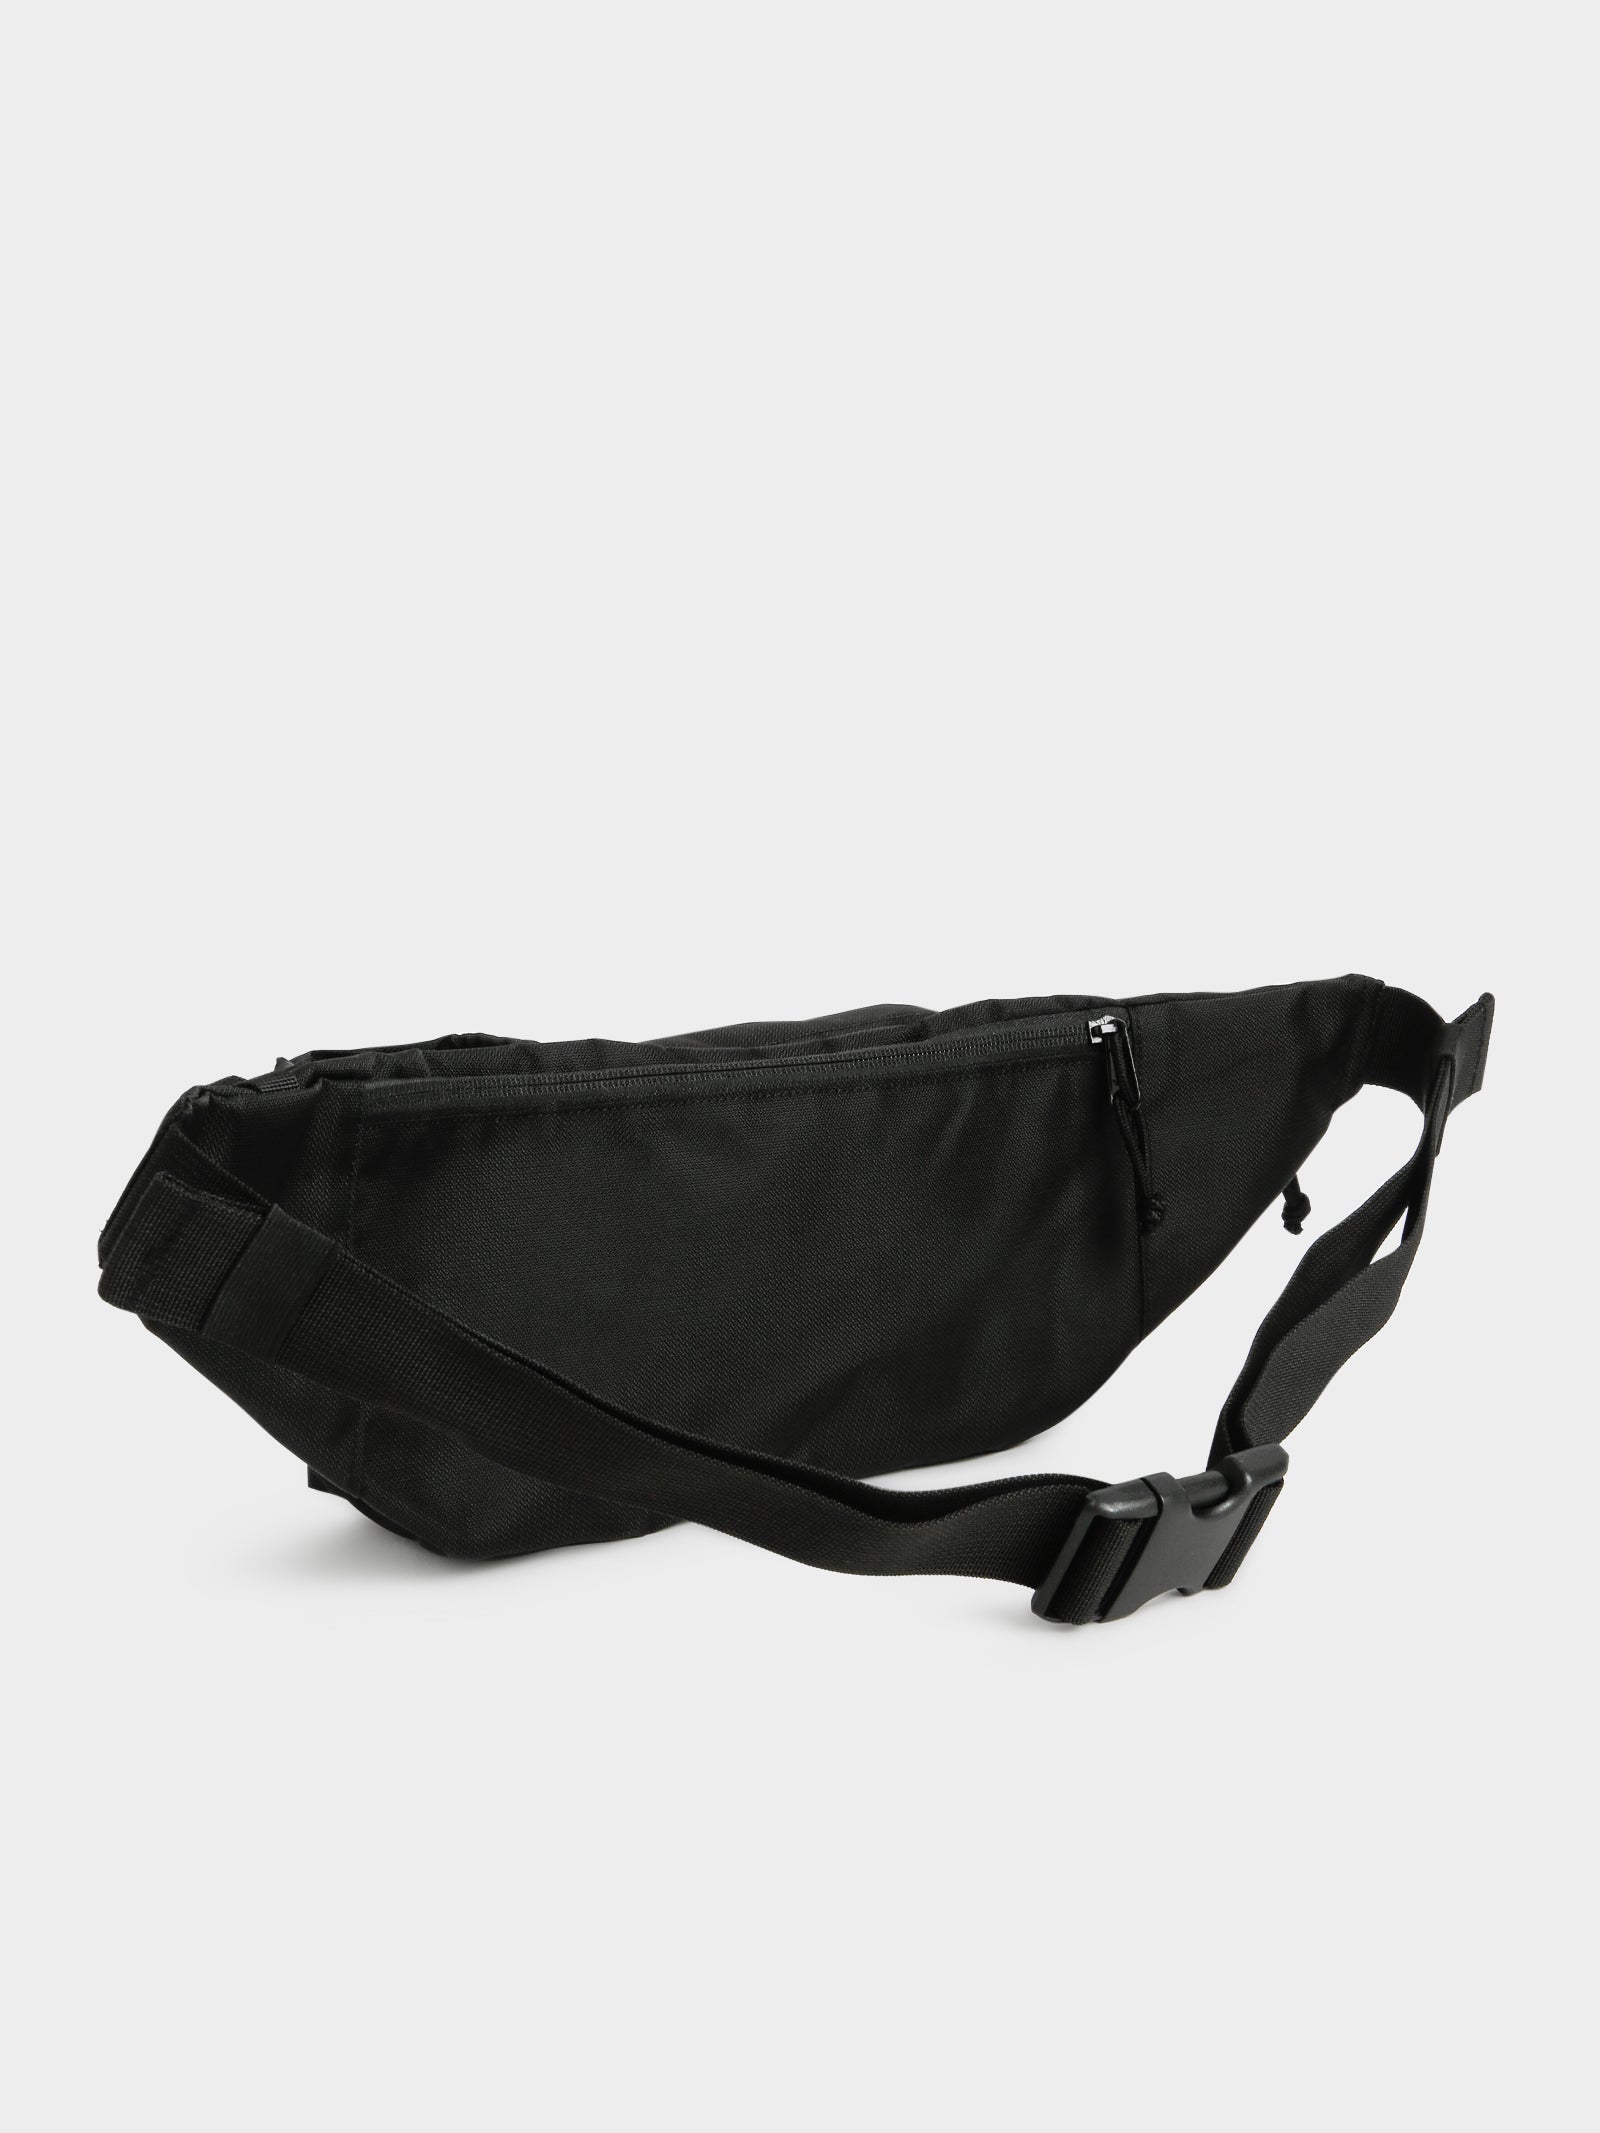 Delta Hip Bag in Black - Glue Store